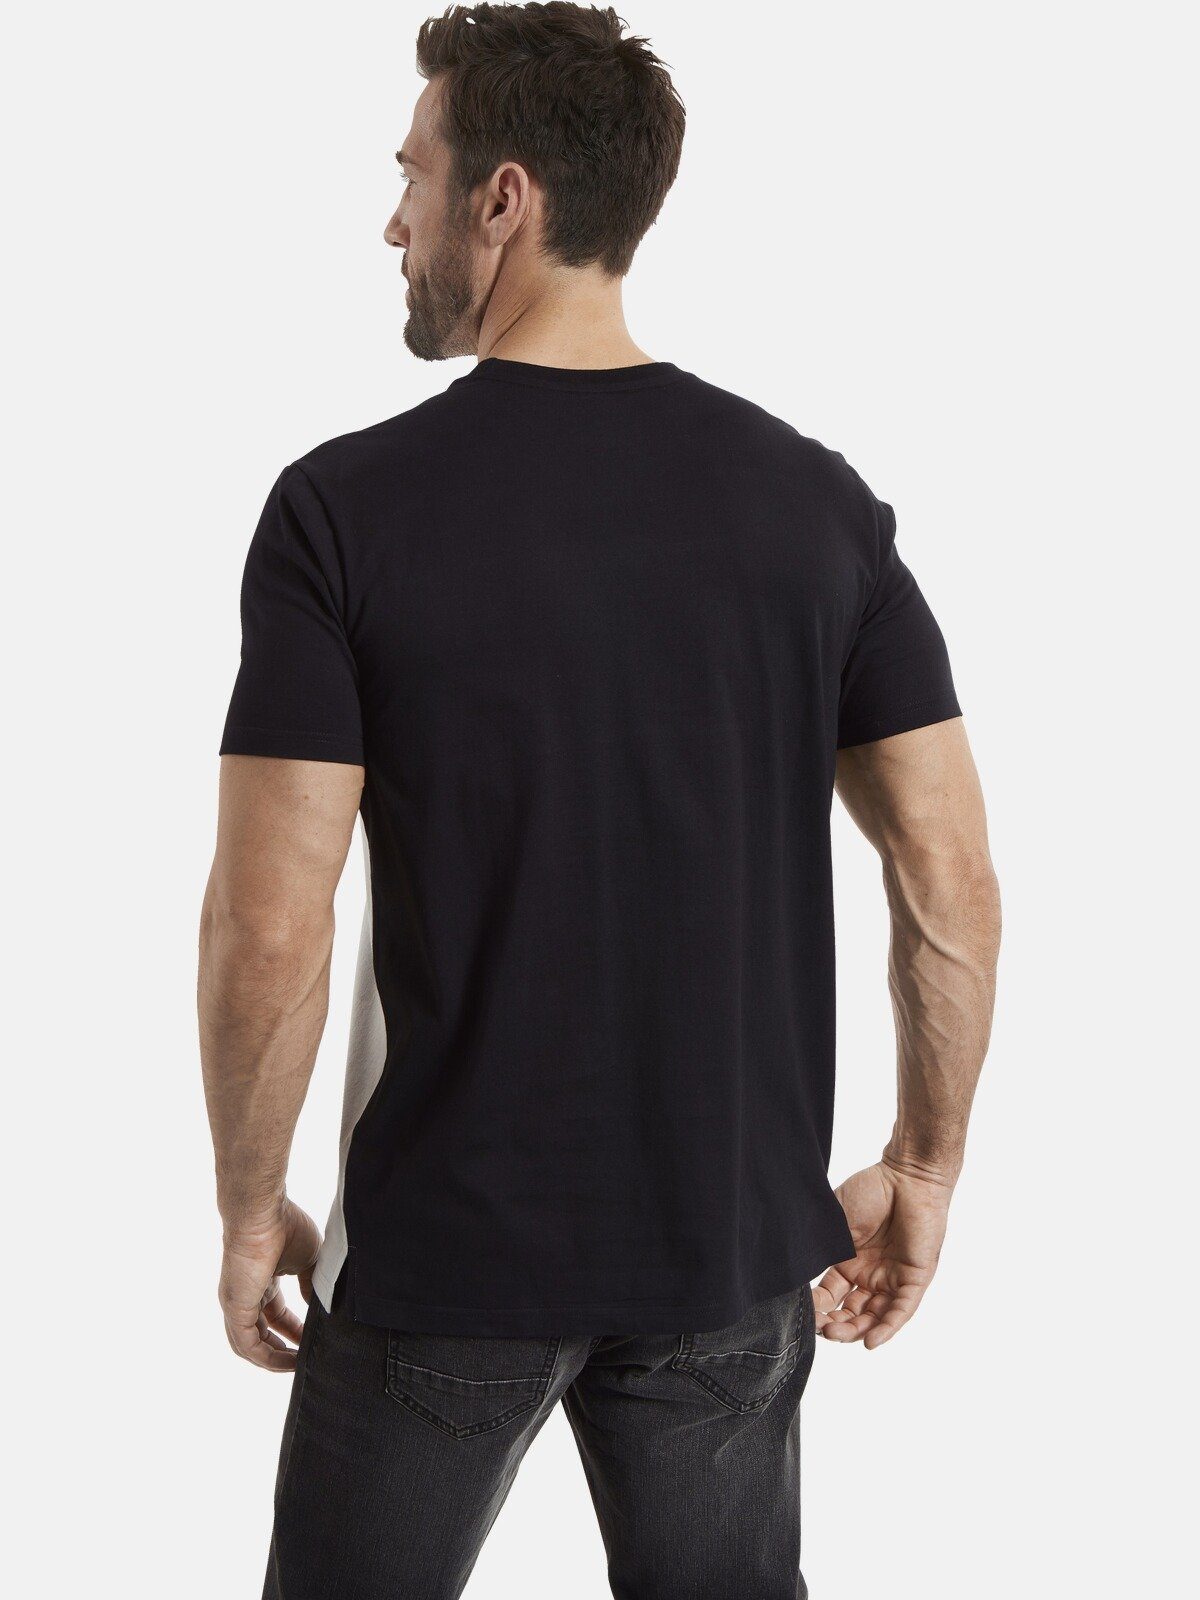 T-Shirt RUNEAS Rücken Vanderstorm Kontrastfarbe Jan in